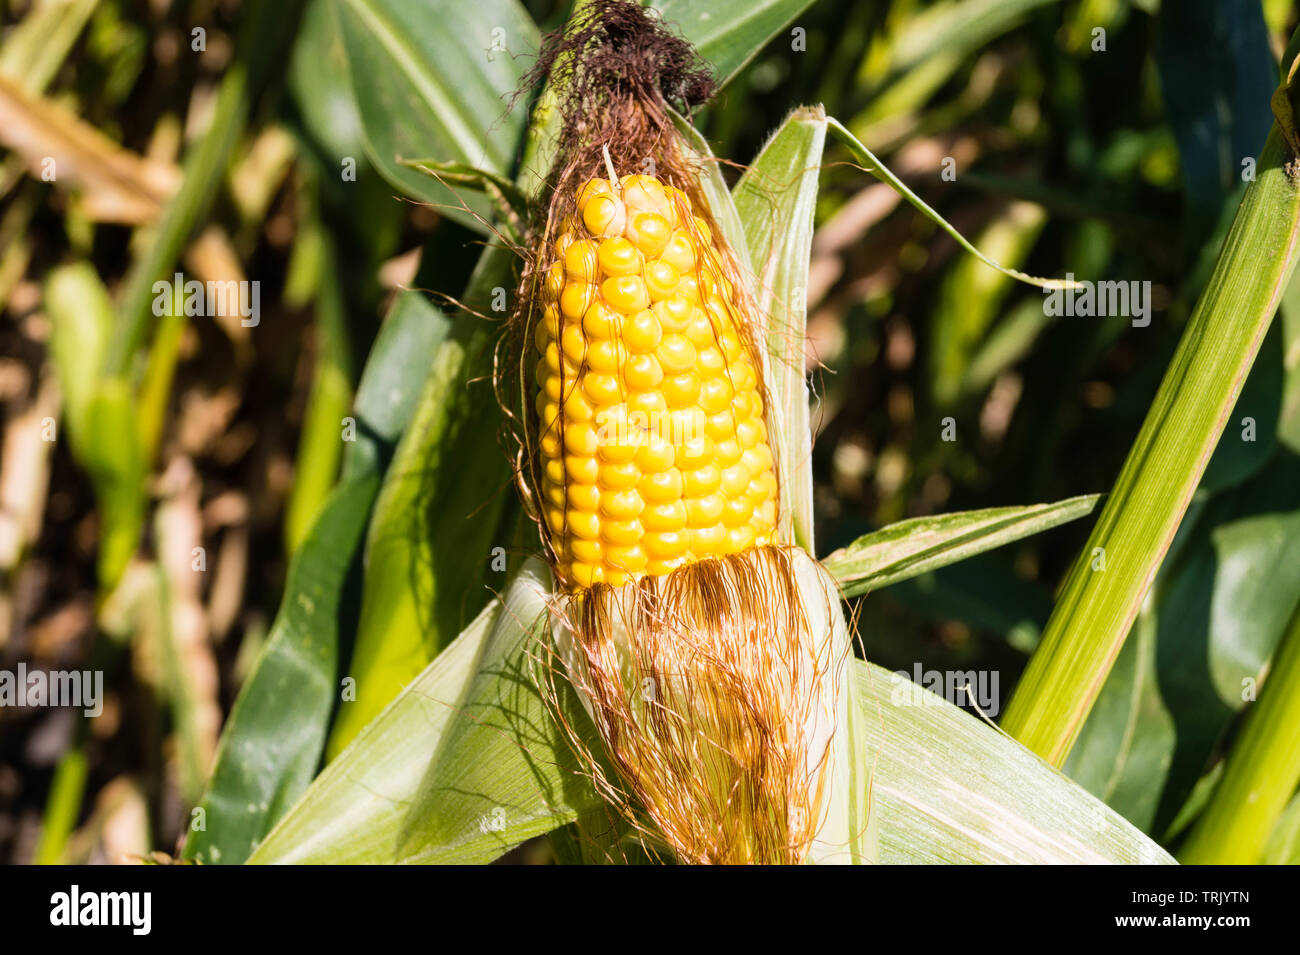 the yellow corn Stock Photo